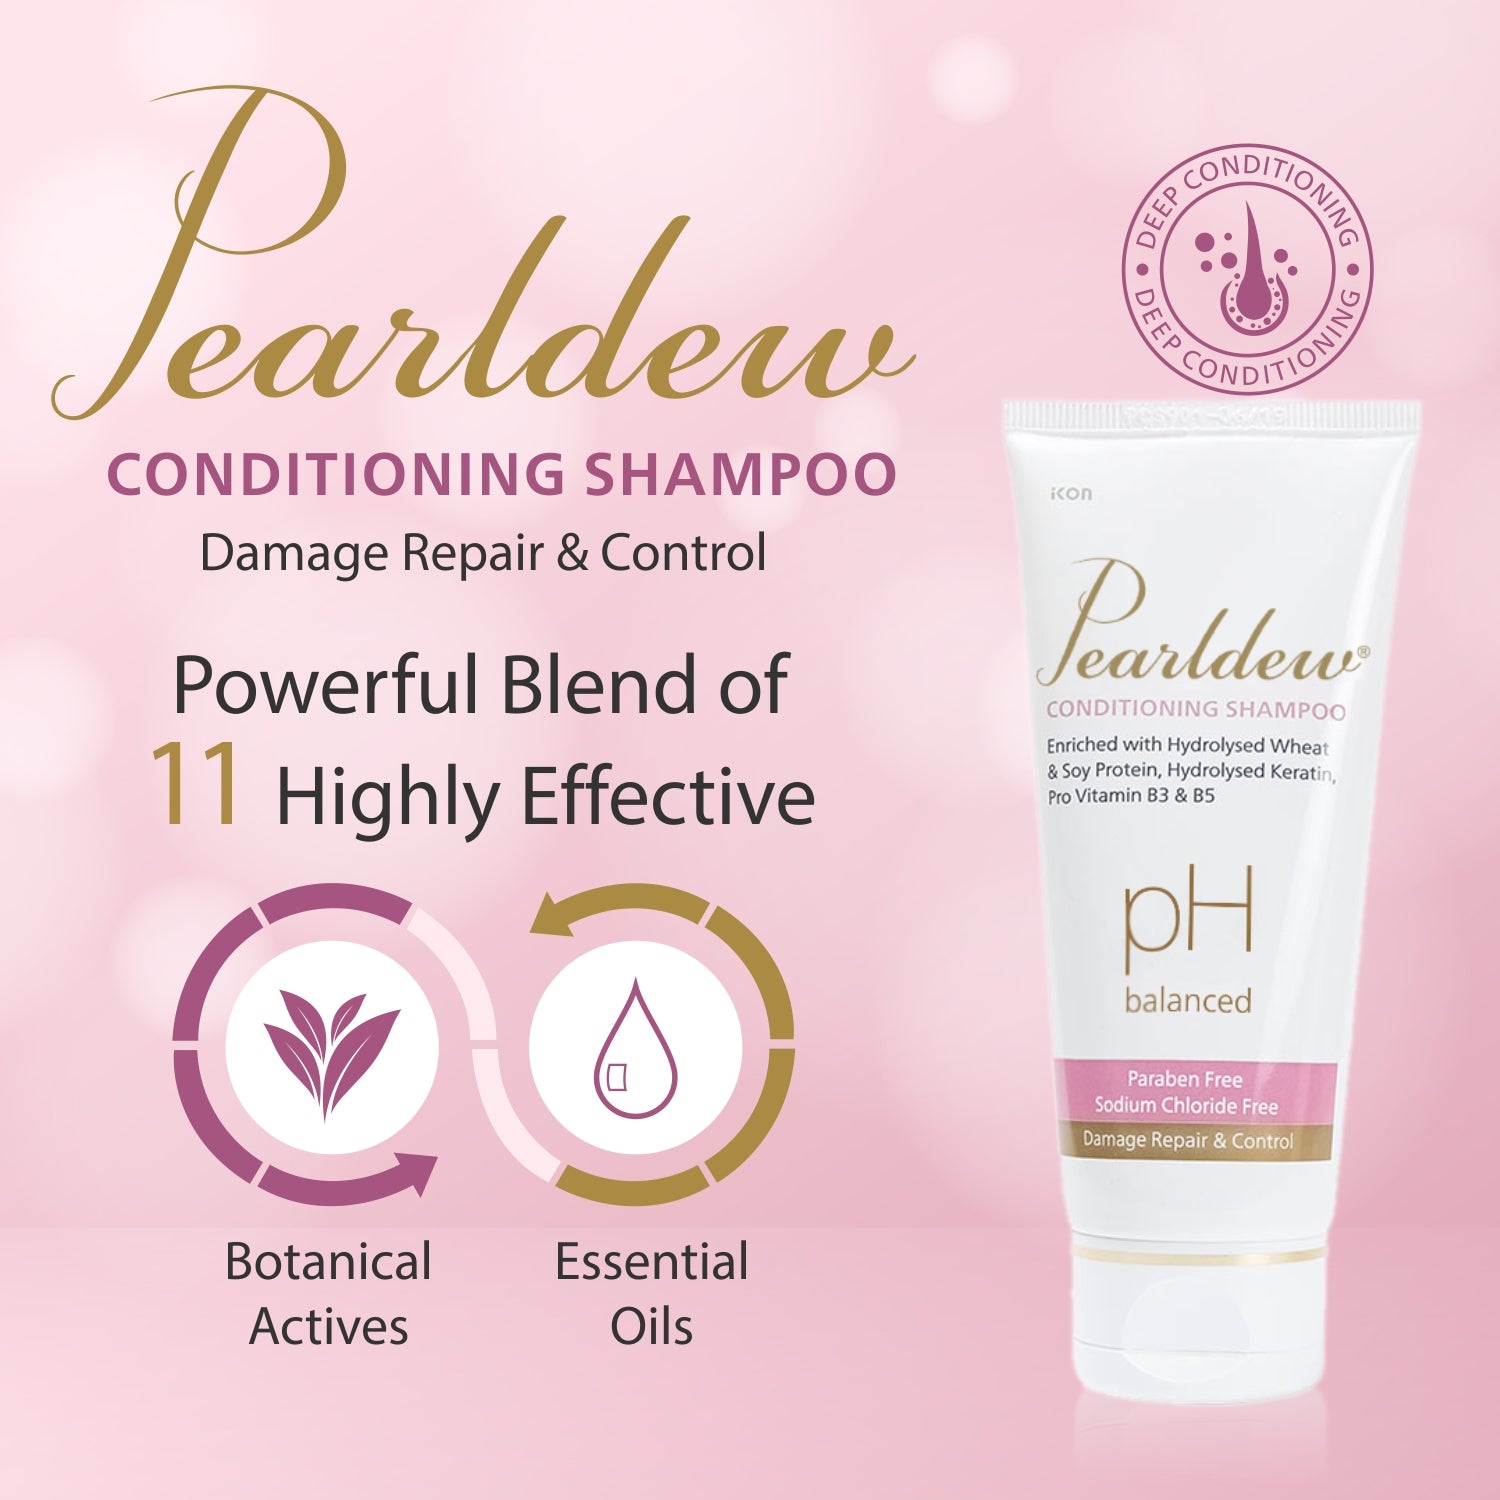 Pearldew Conditioning Shampoo (200 ml)